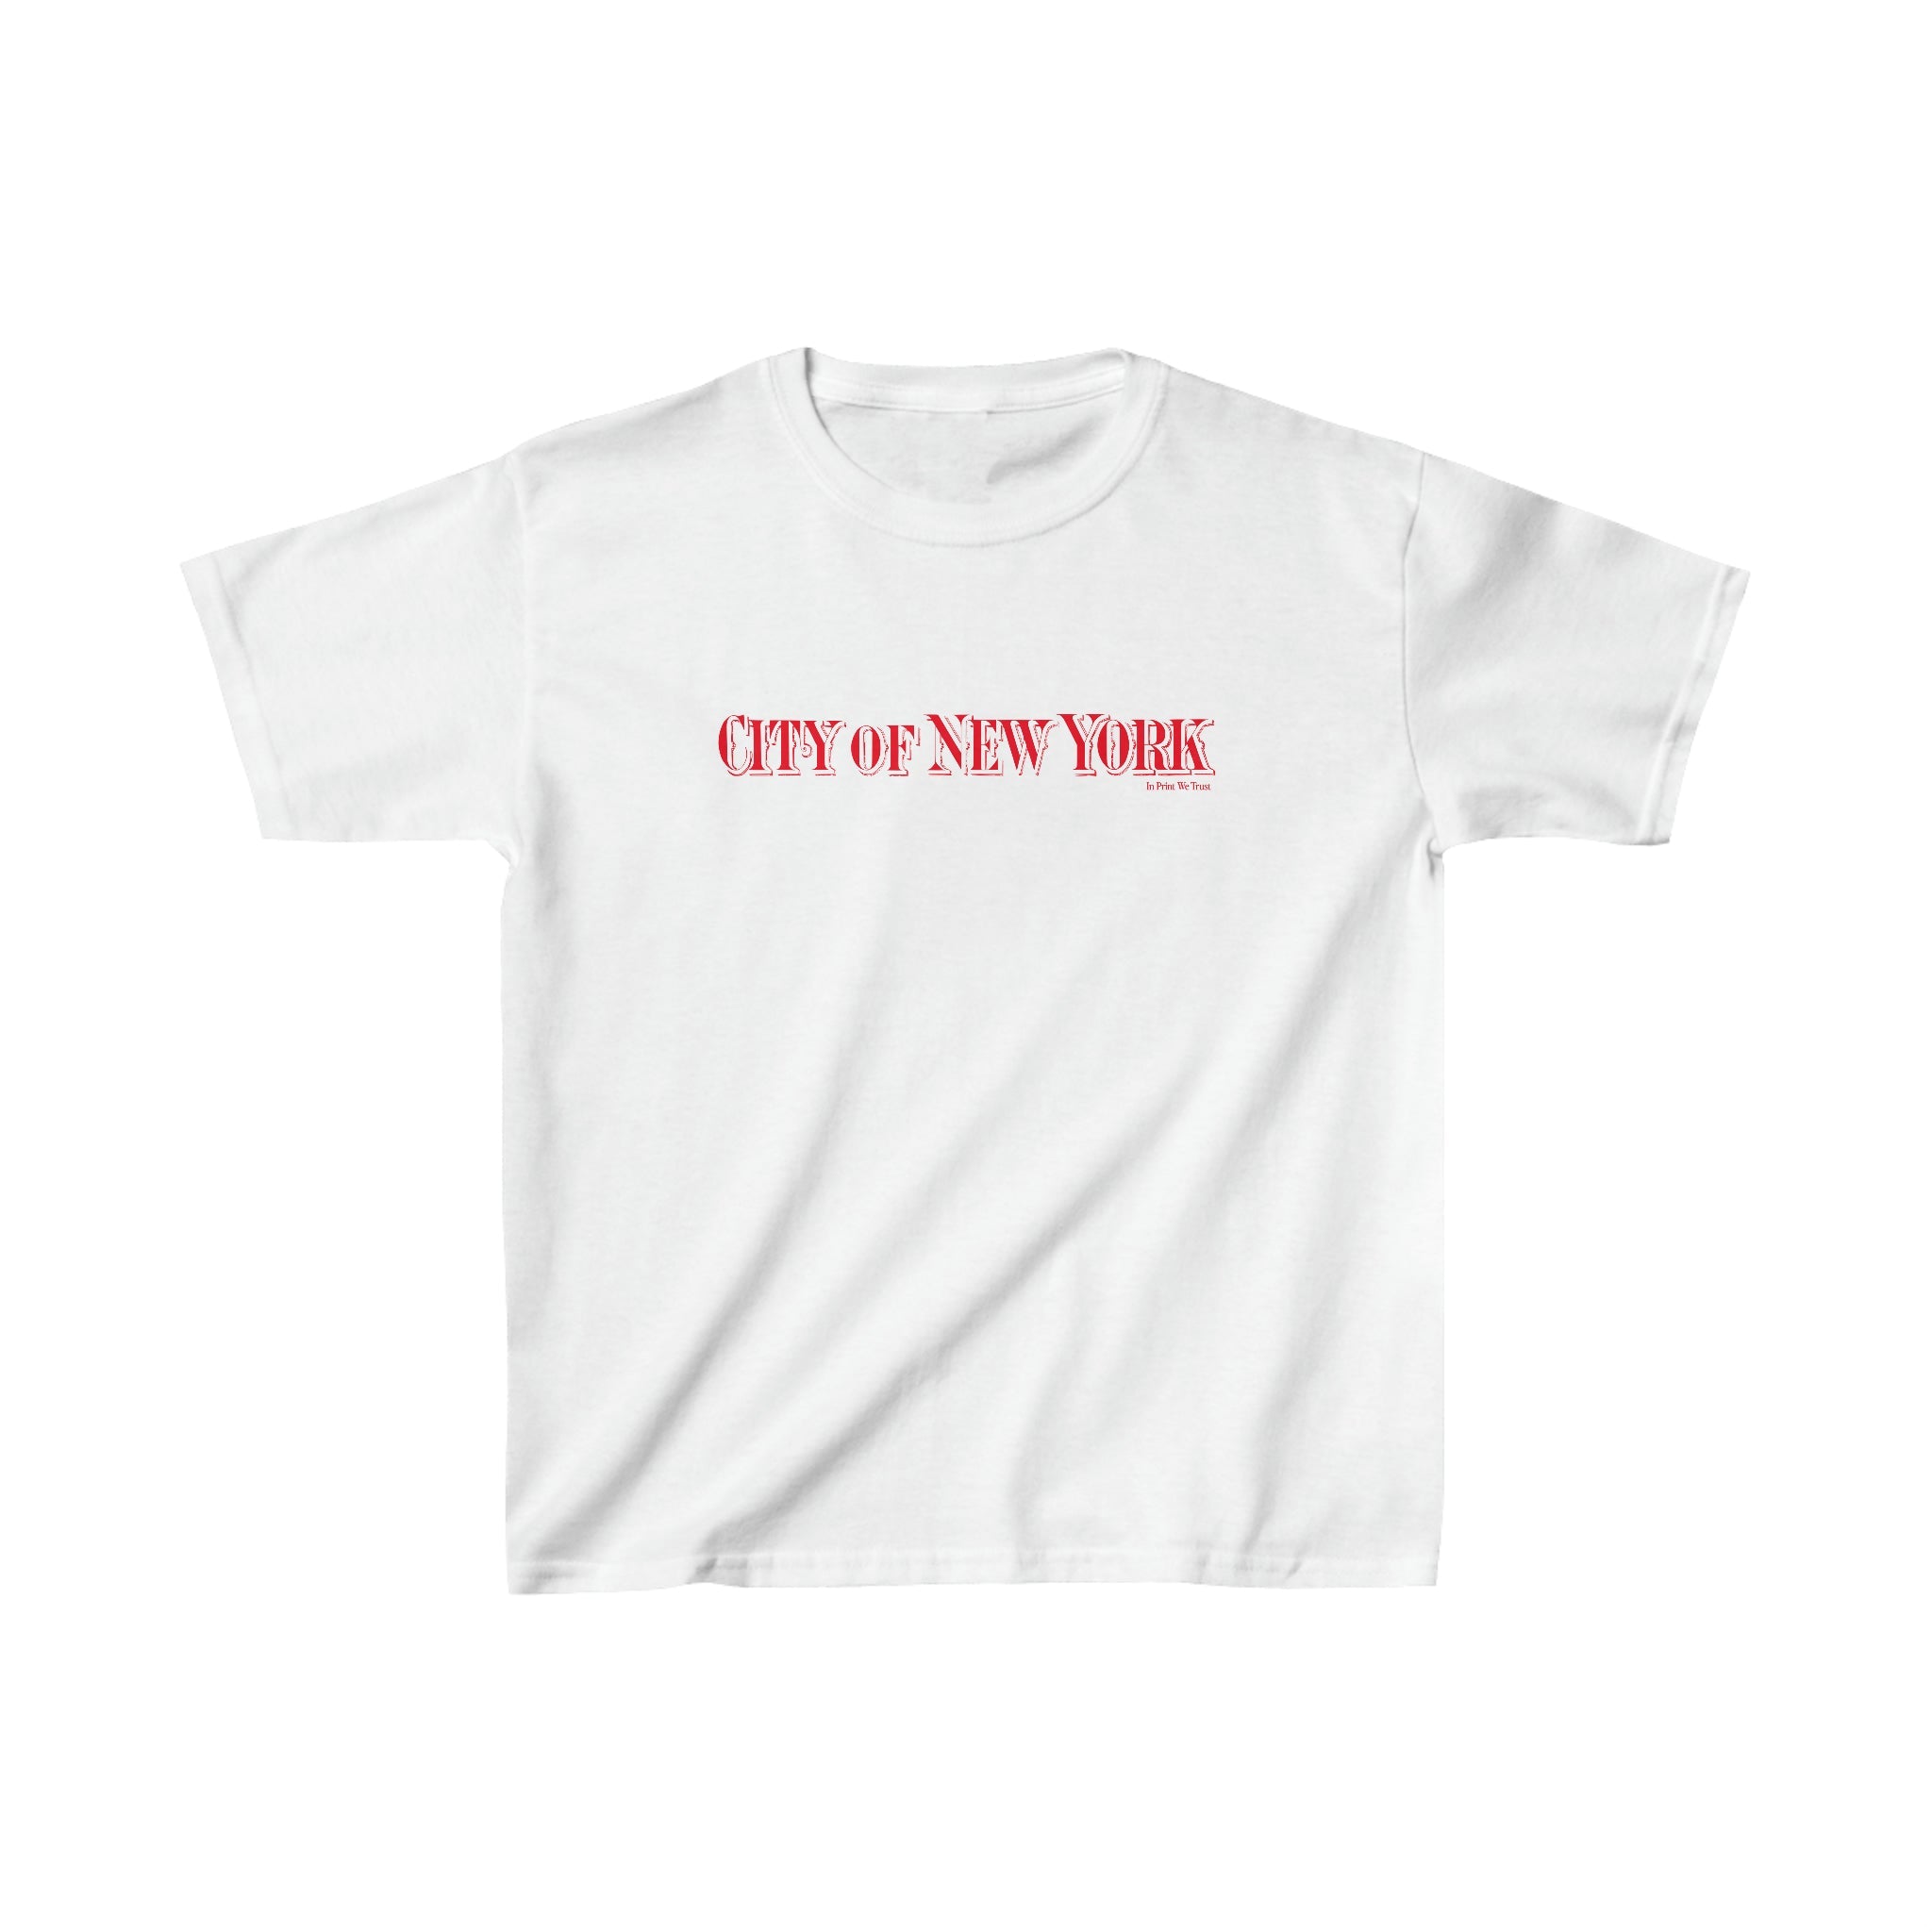 'City of New York' baby tee - In Print We Trust